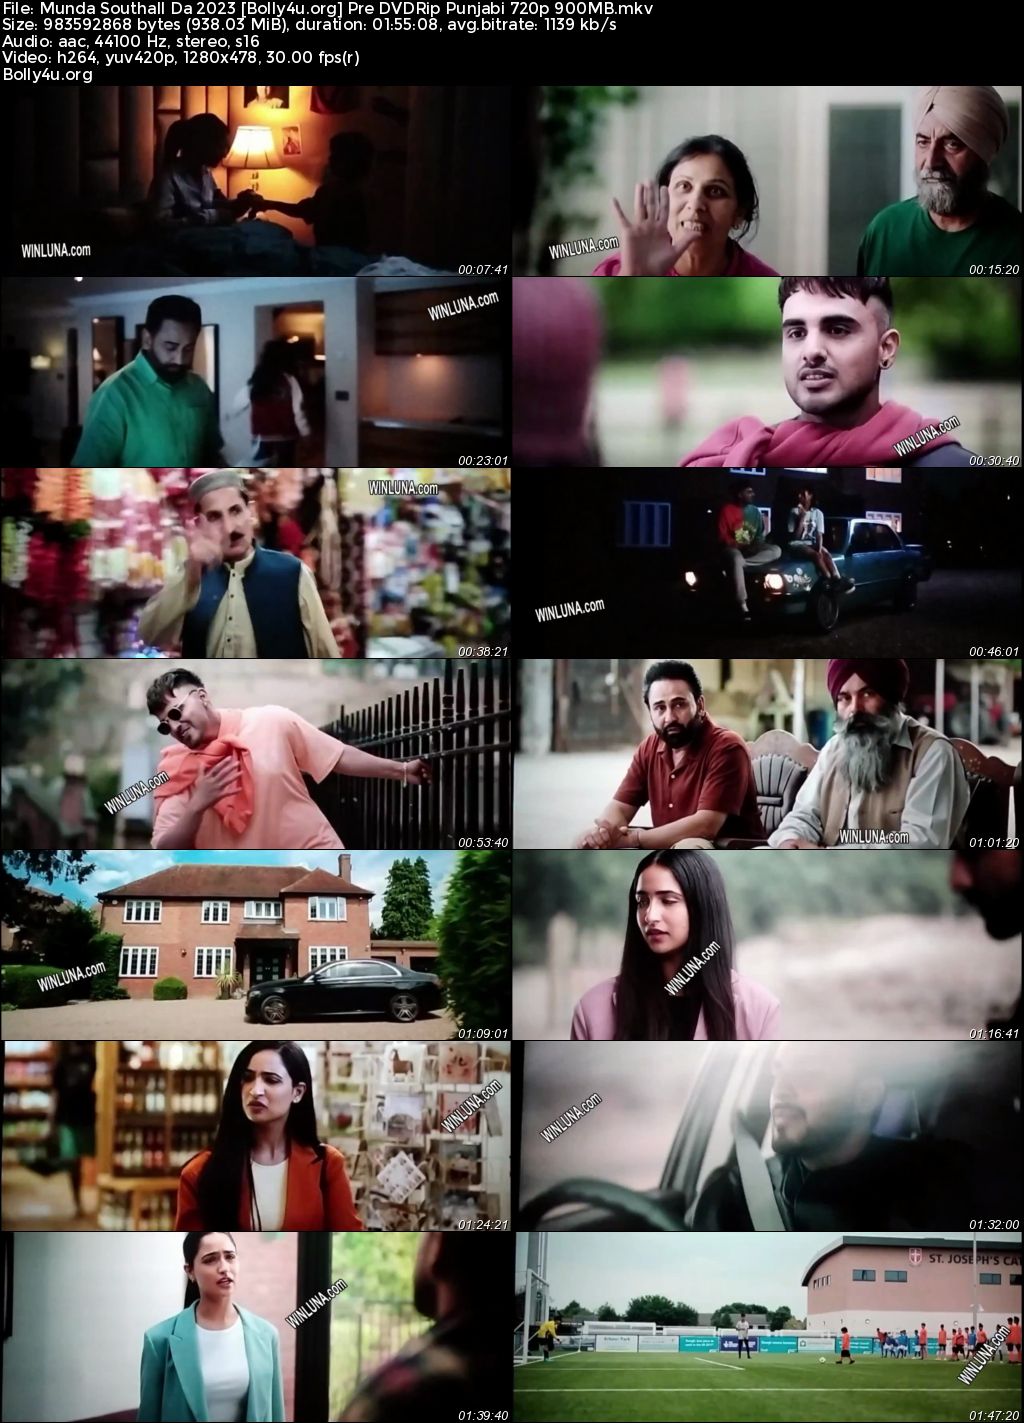 Munda Southall Da 2023 Pre DVDRip Punjabi Full Movie Download 1080p 720p 480p